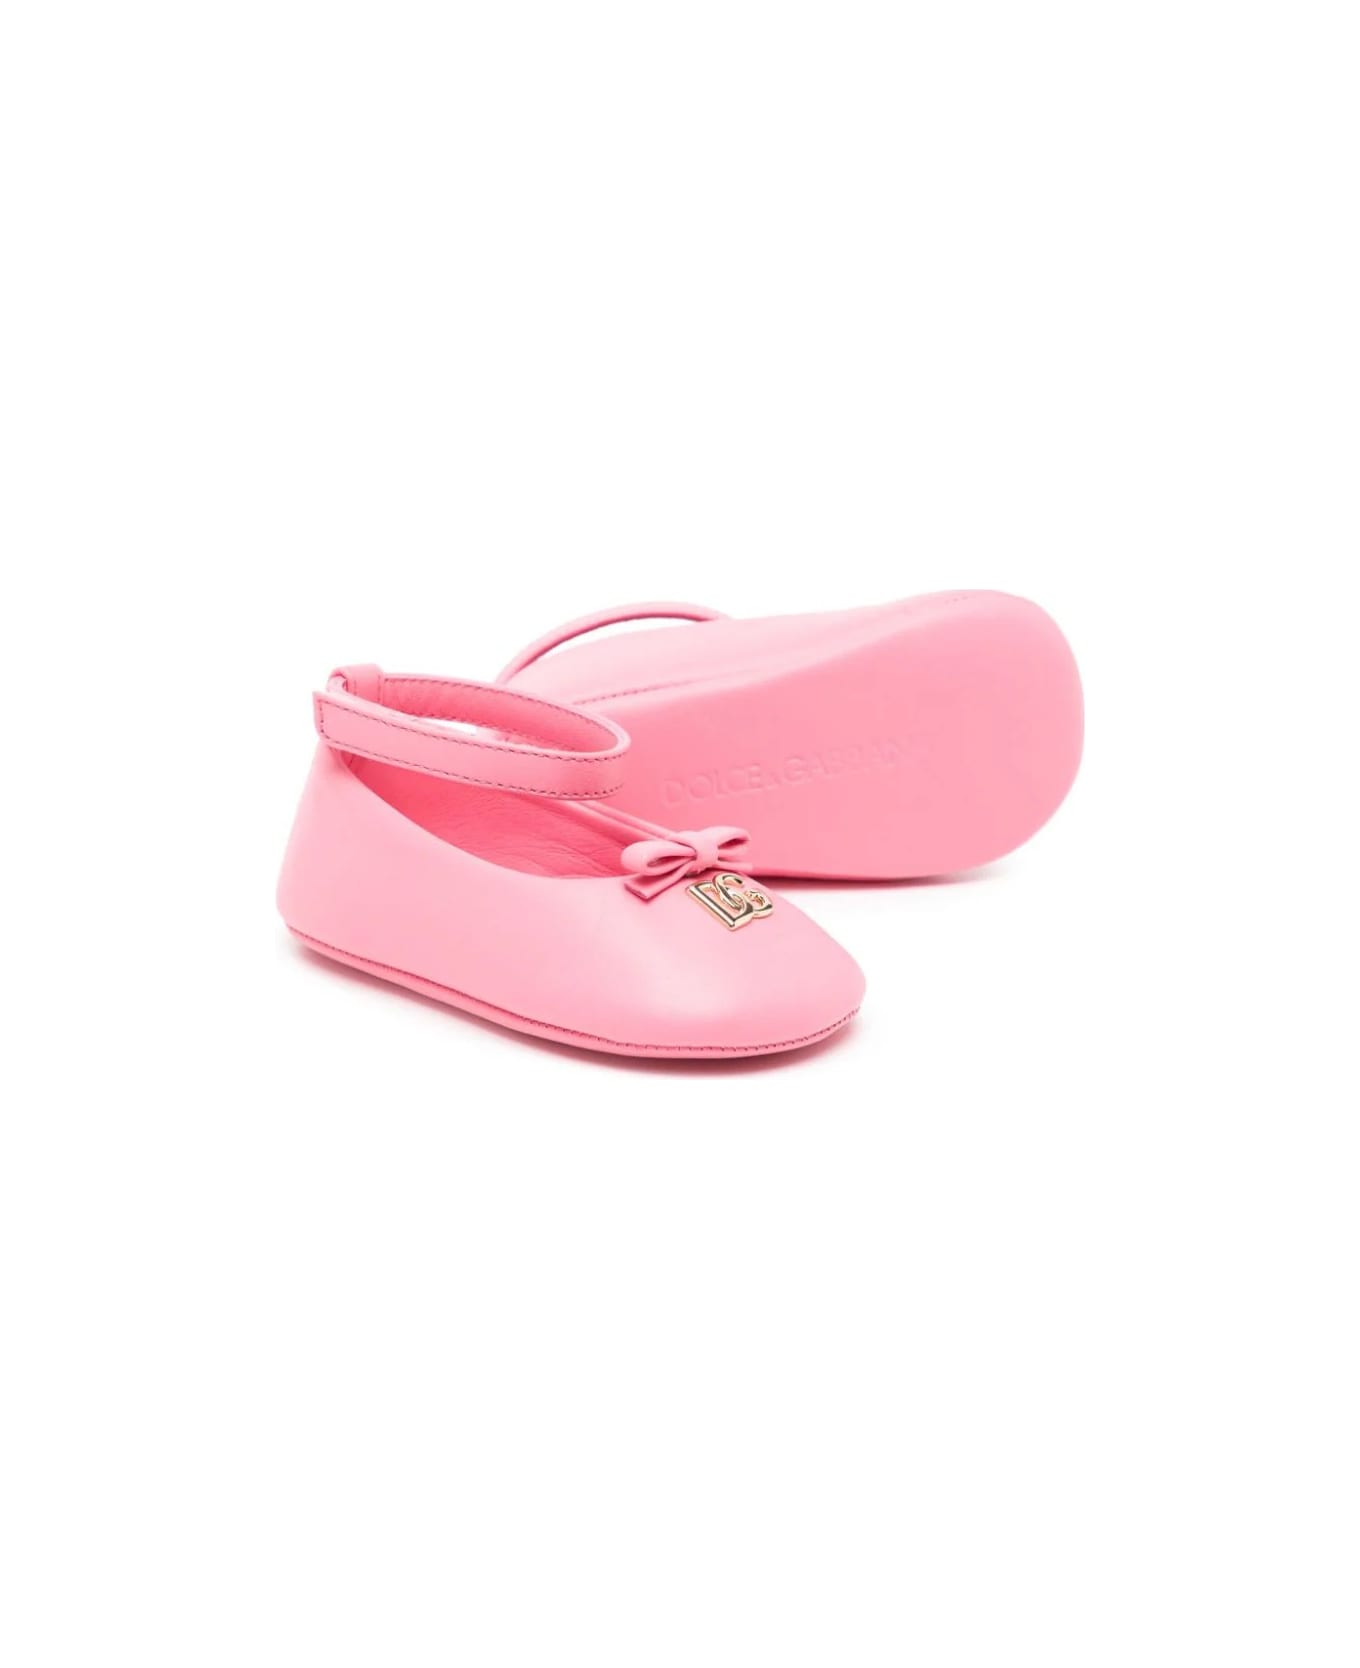 Dolce & Gabbana Ballerinas With Strap In Blush Pink - Pink シューズ